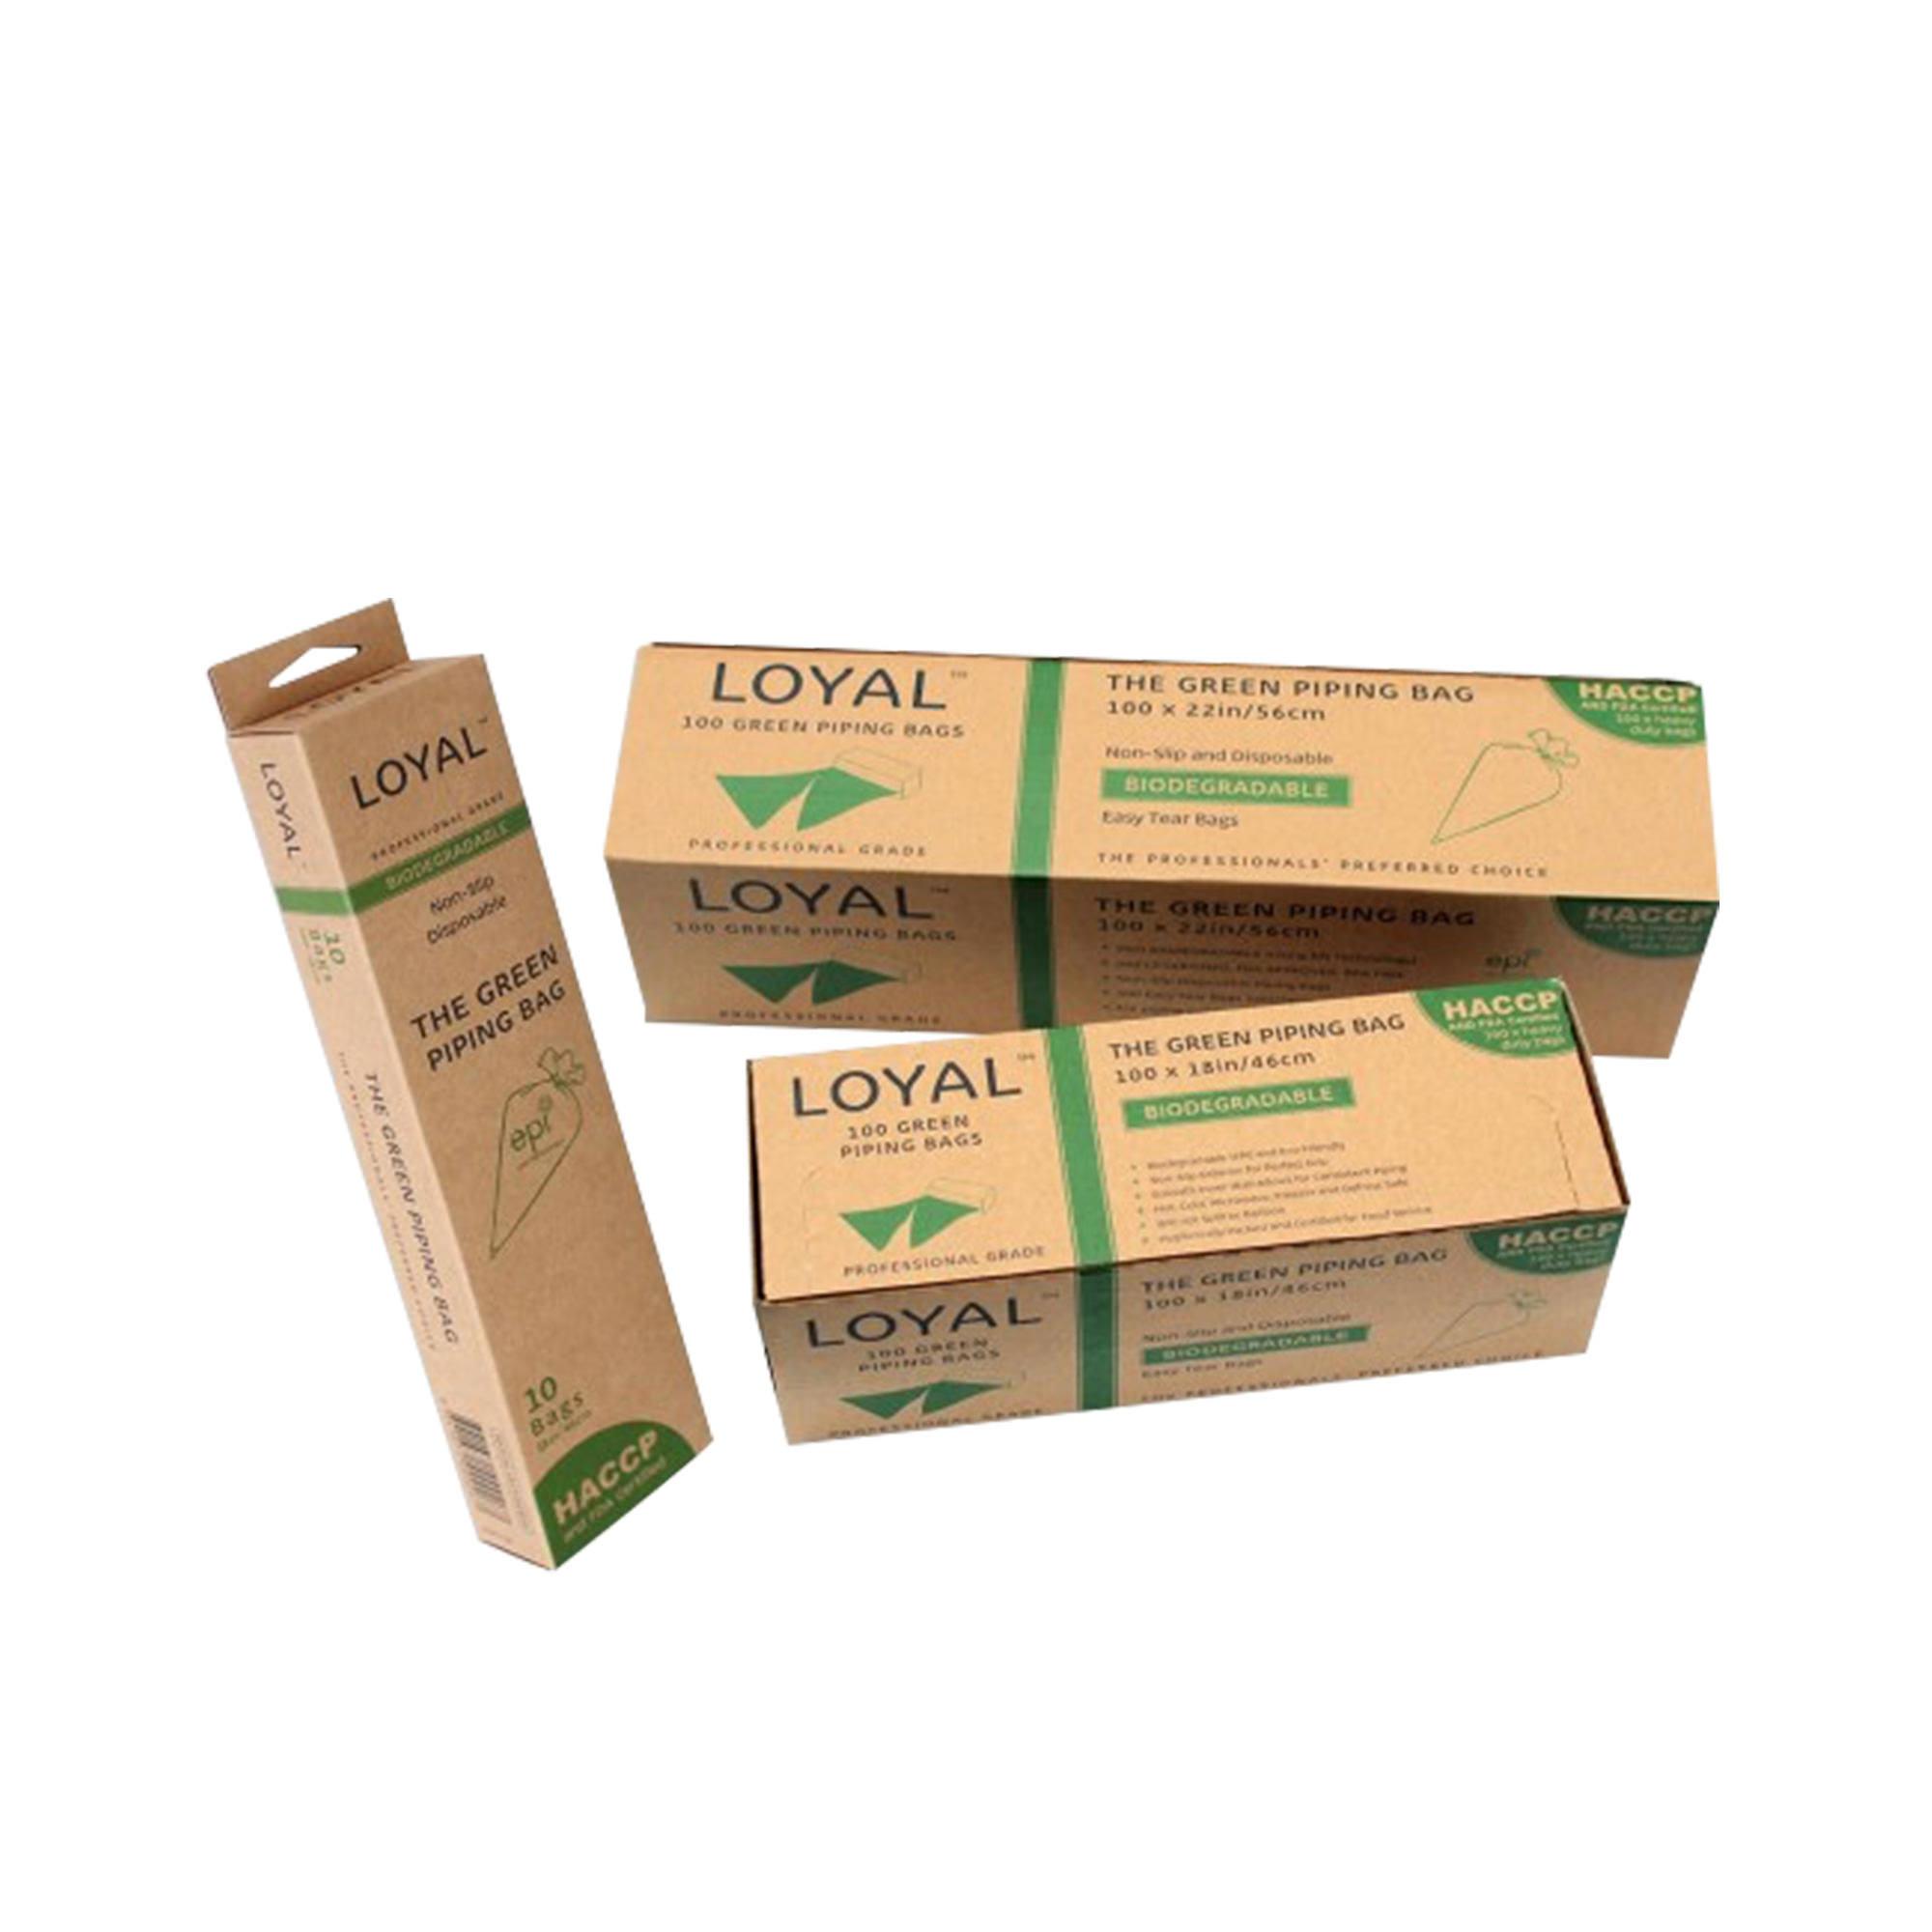 Loyal Biodegradable Disposable Piping bag 46cm 10pk Green Image 3